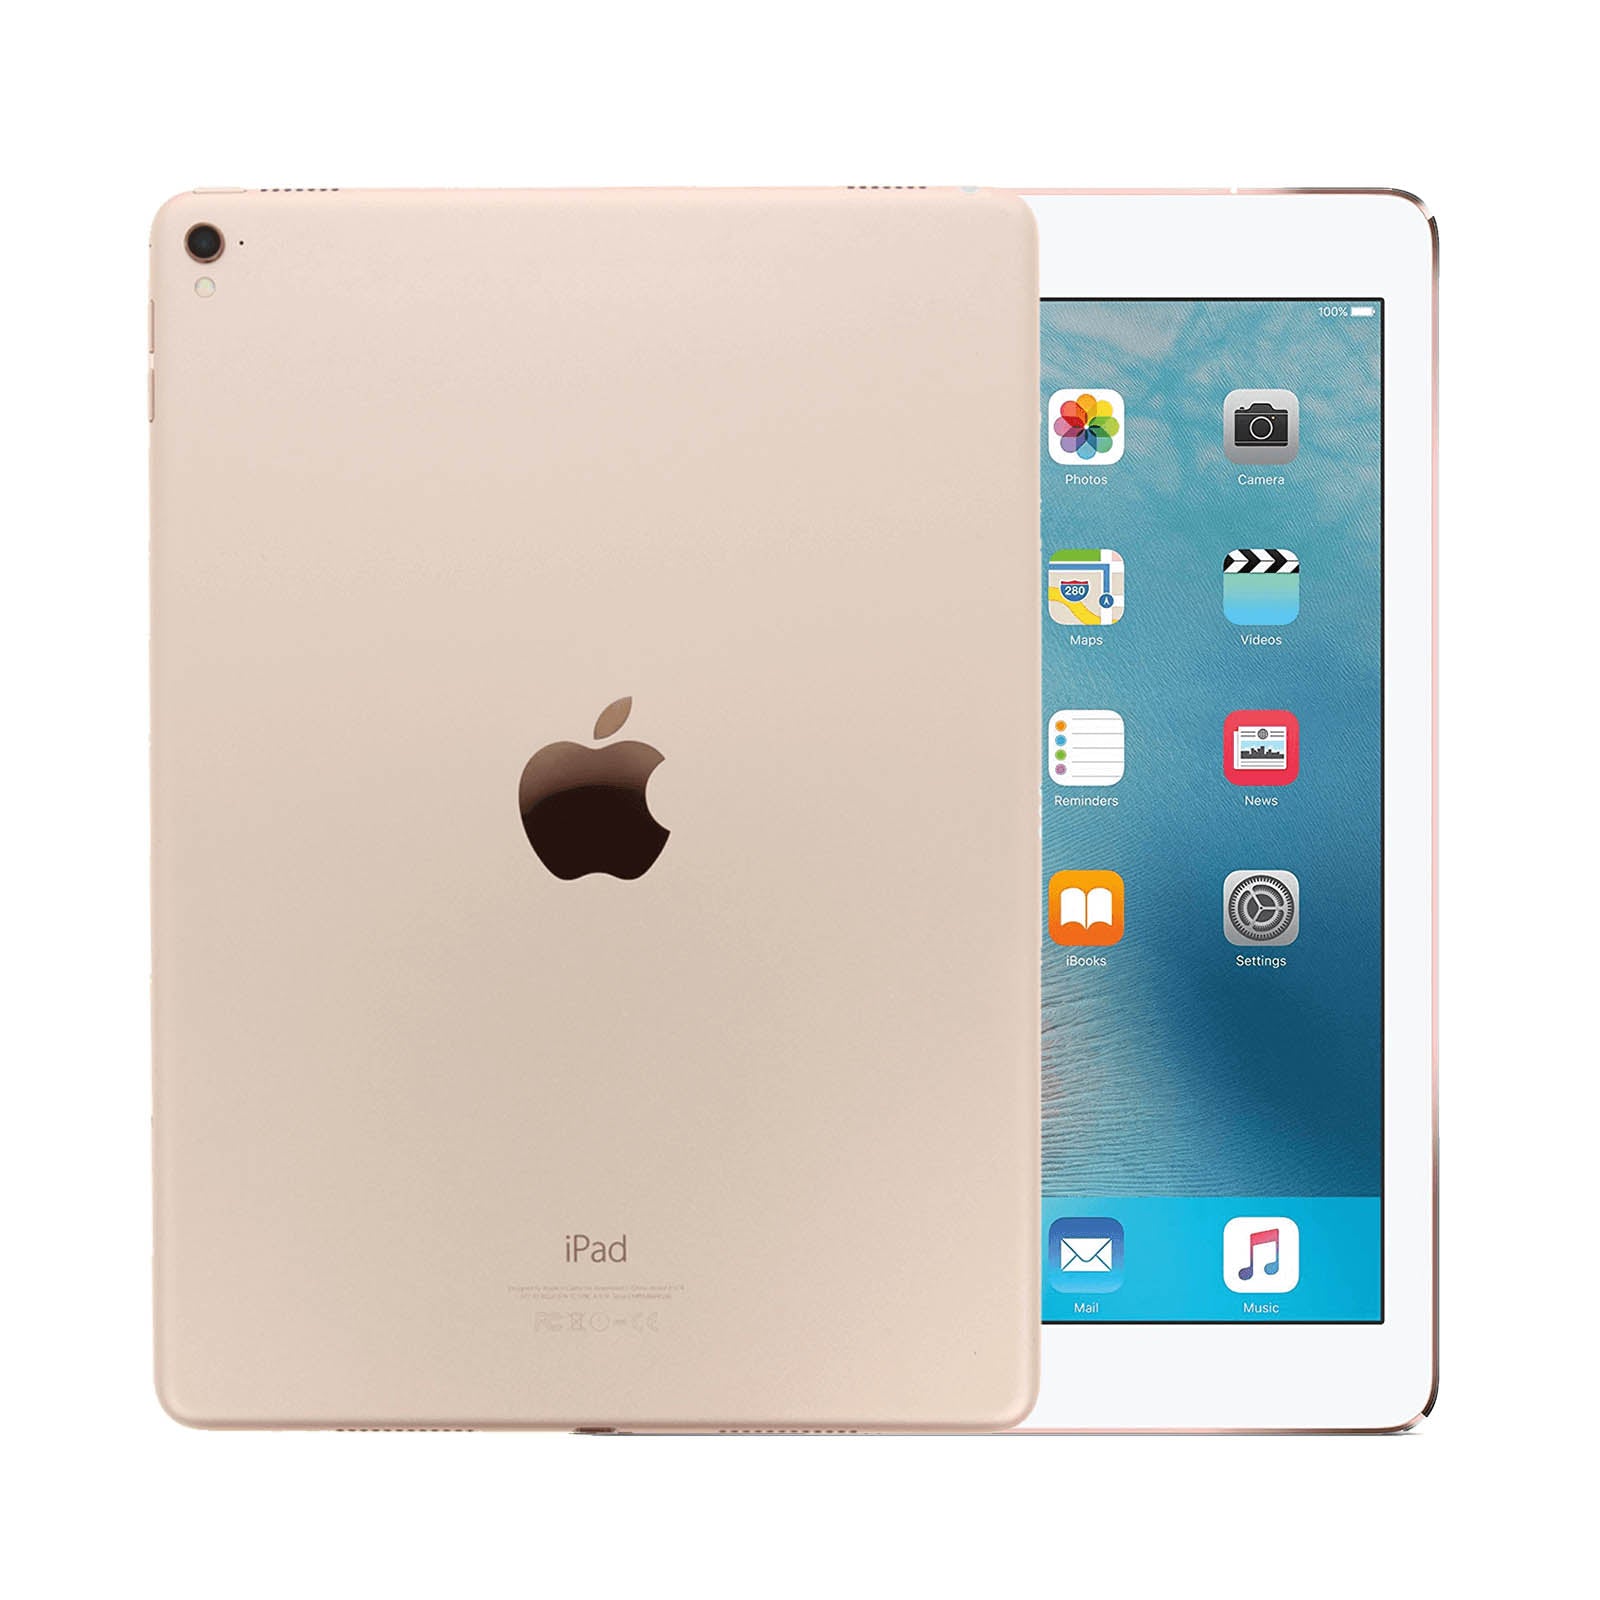 iPad Pro 9.7 Inch 256GB WiFi - Grade C Gold Gut WiFi